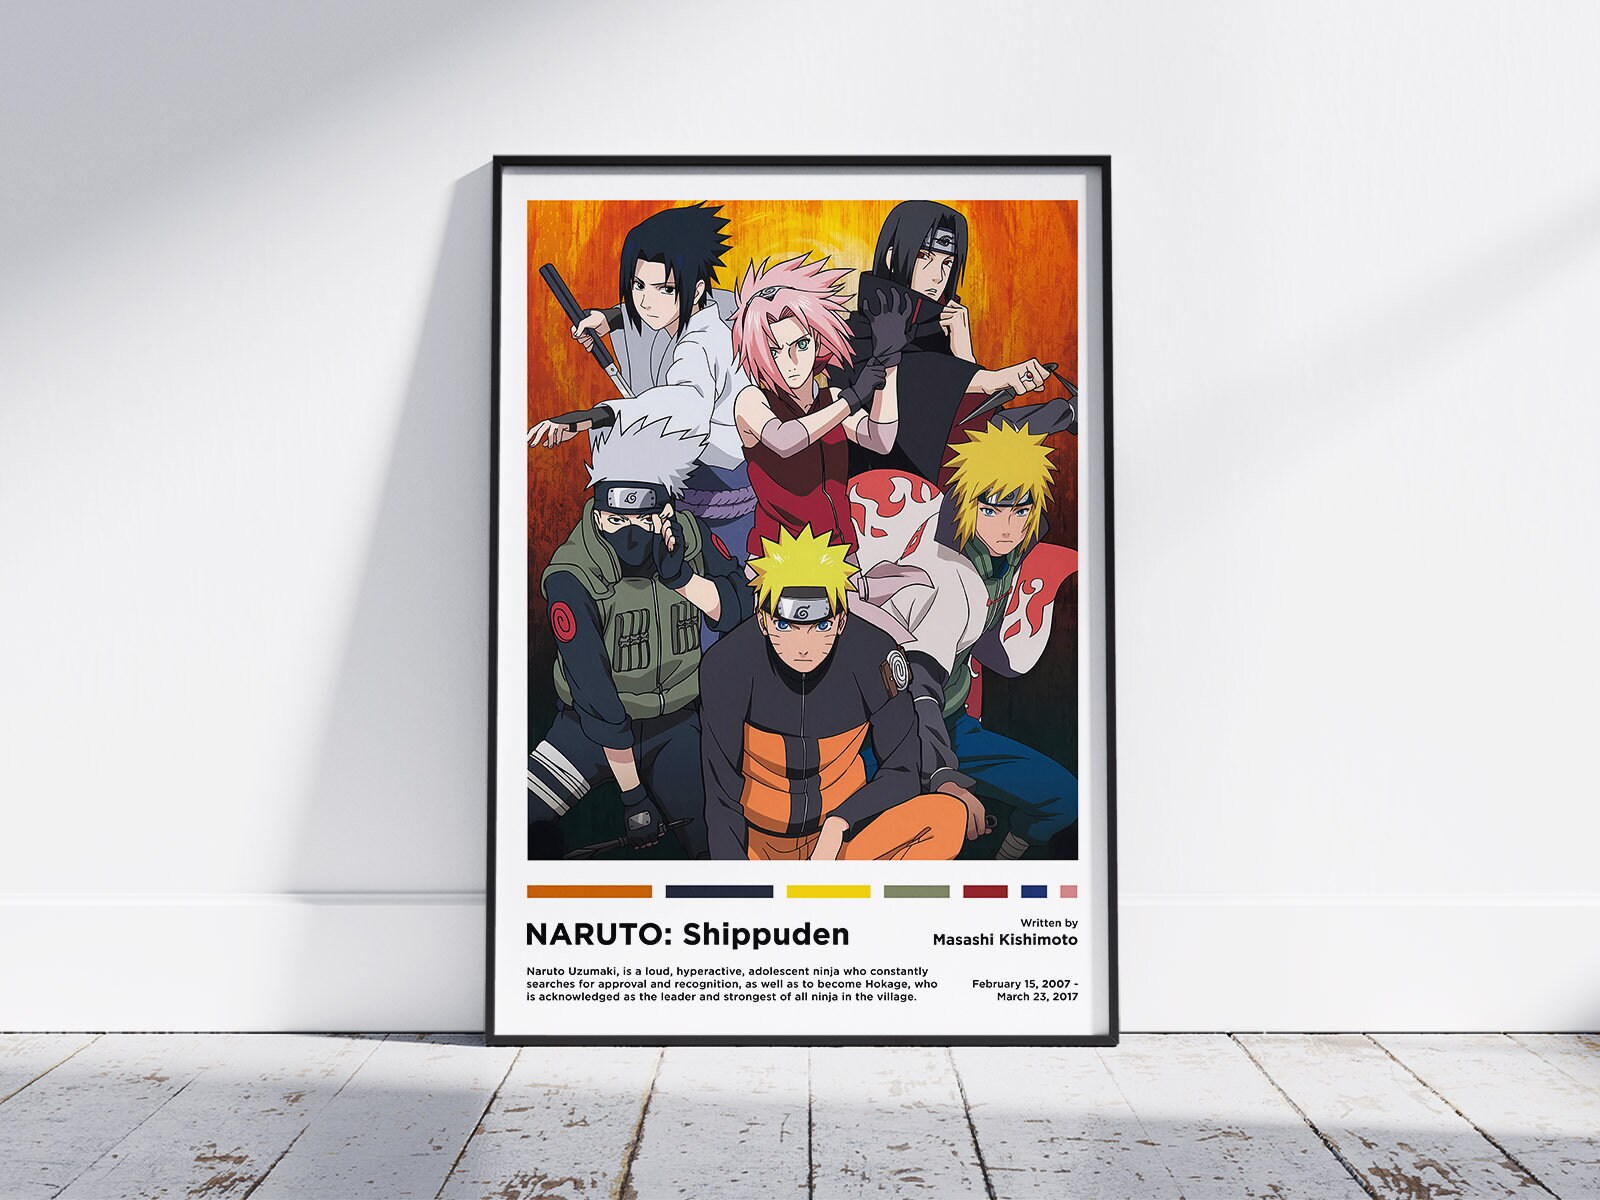 Poster, Quadro Naruto Shippuden - Naruto & Sasuke em